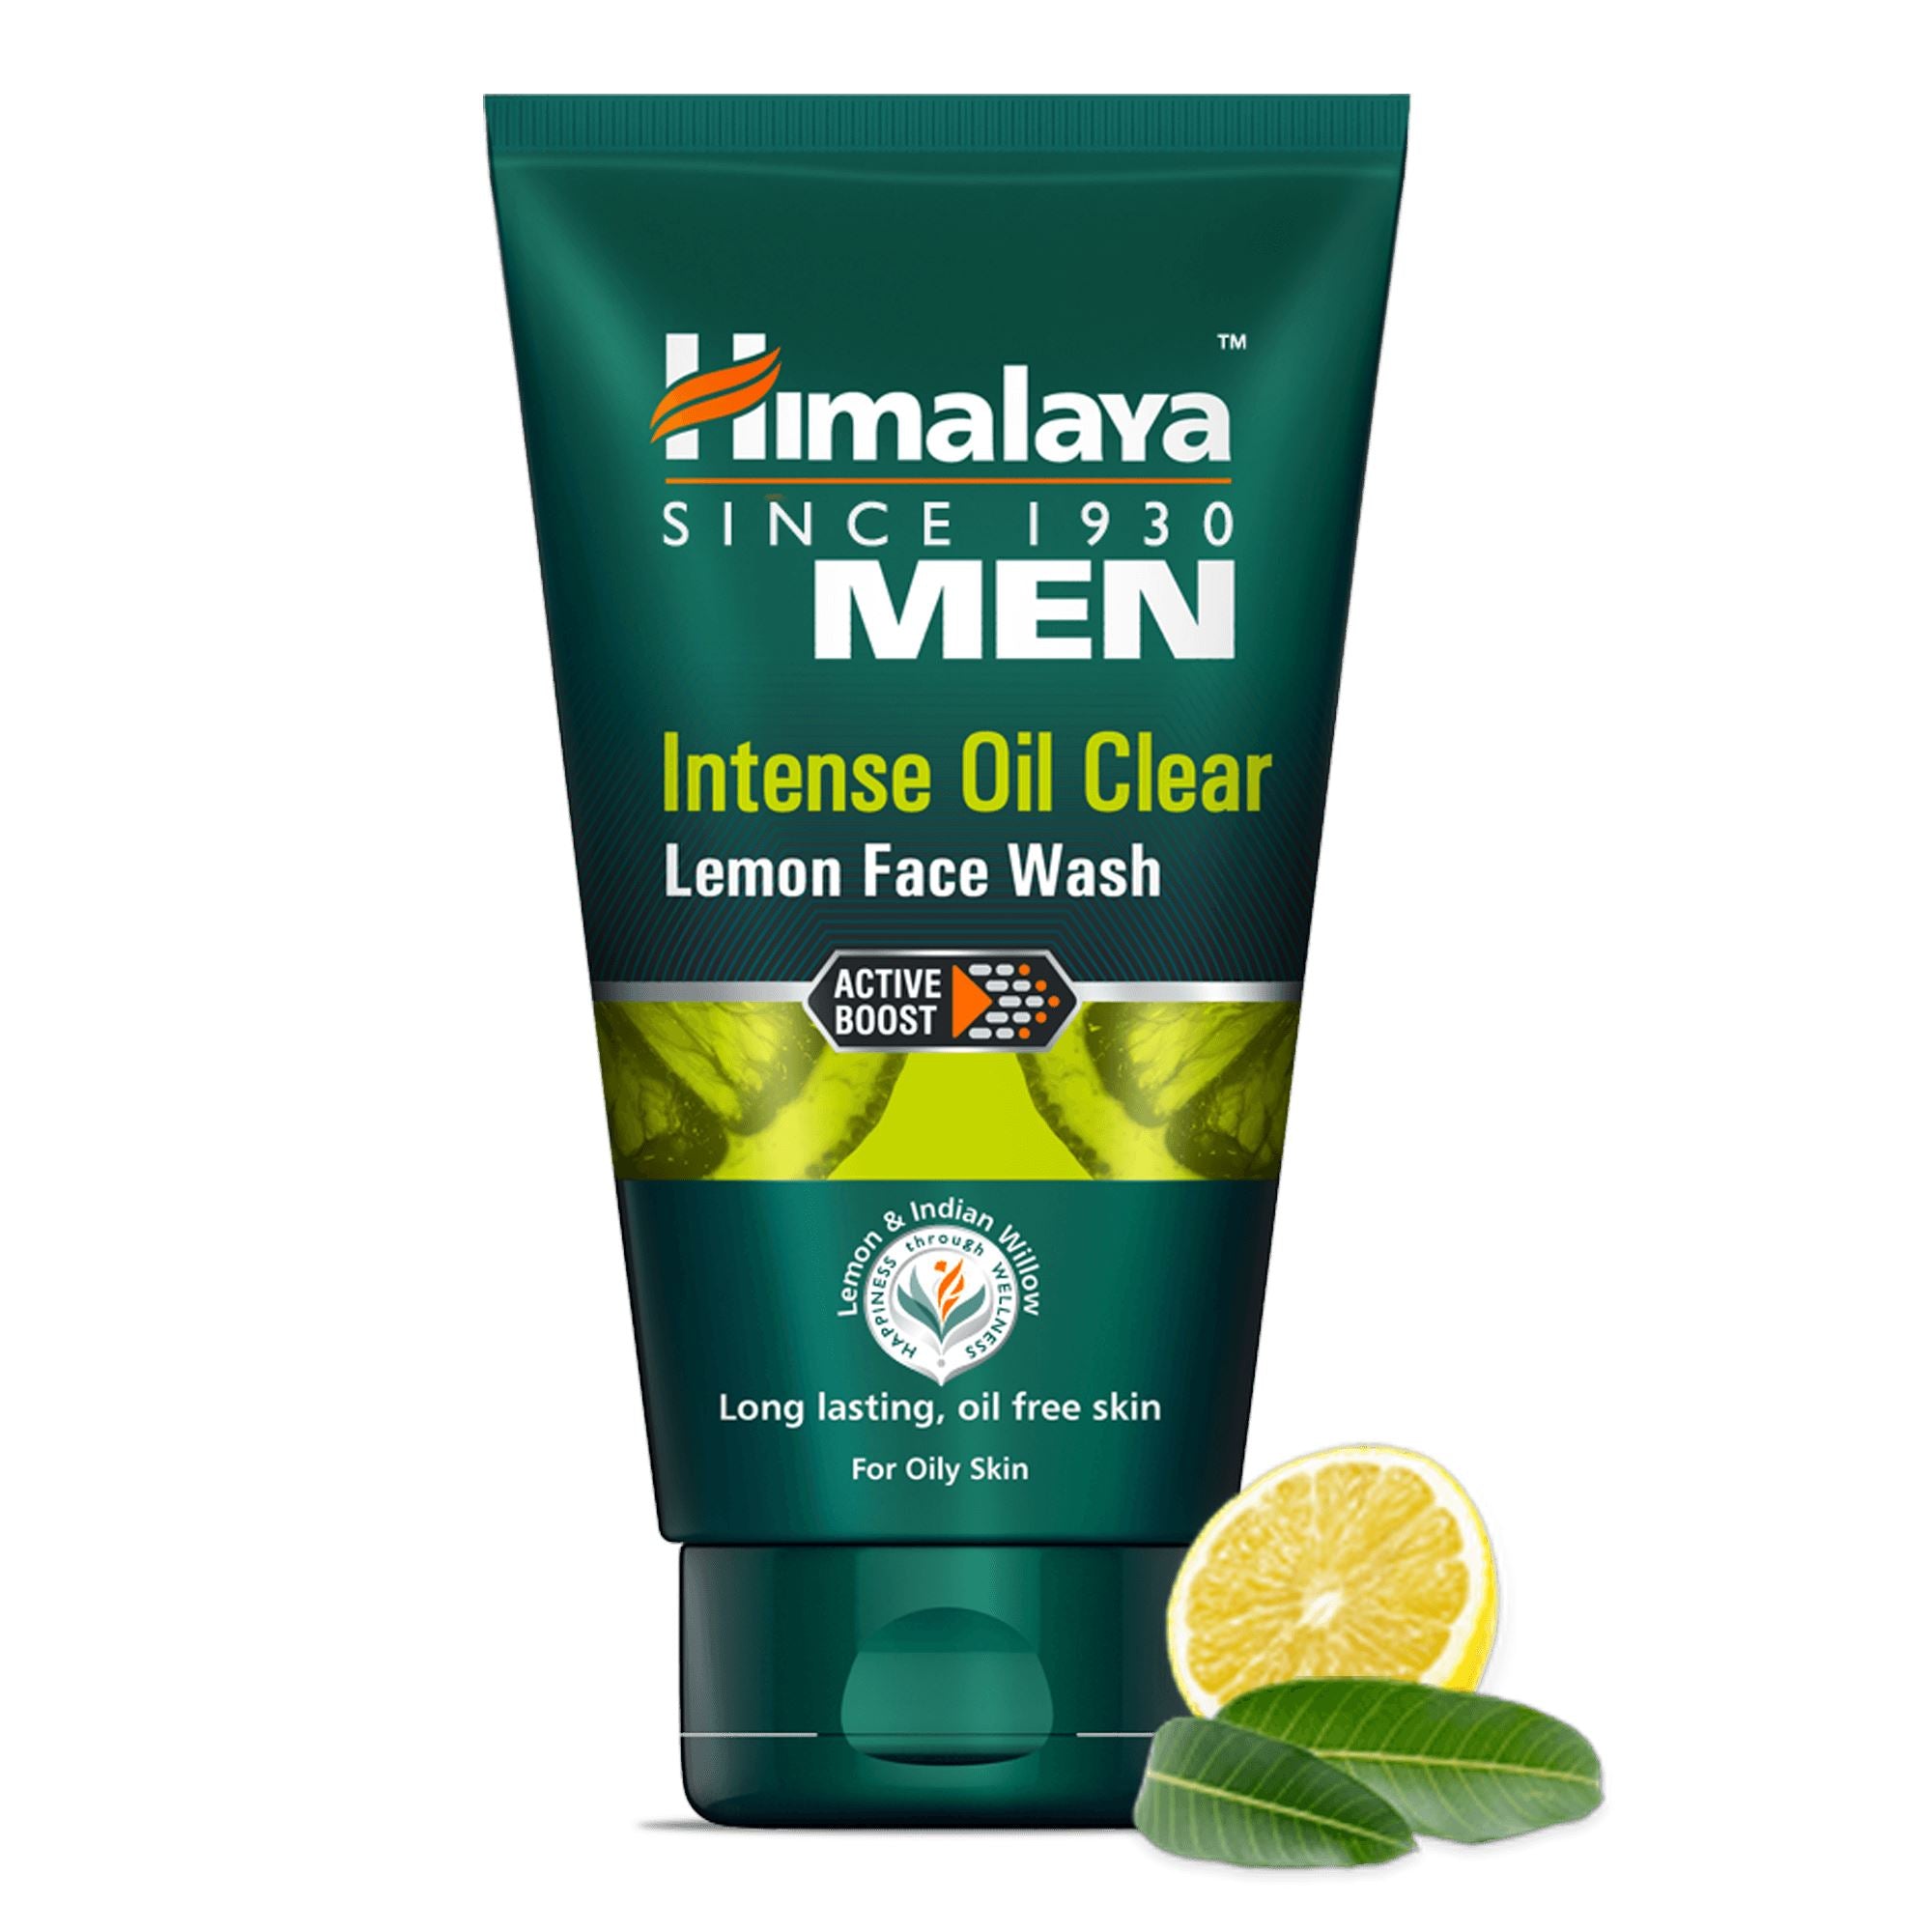 Himalaya MEN Intense Oil Clear Lemon Face Wash 100ml - Long lasting, oil free skin